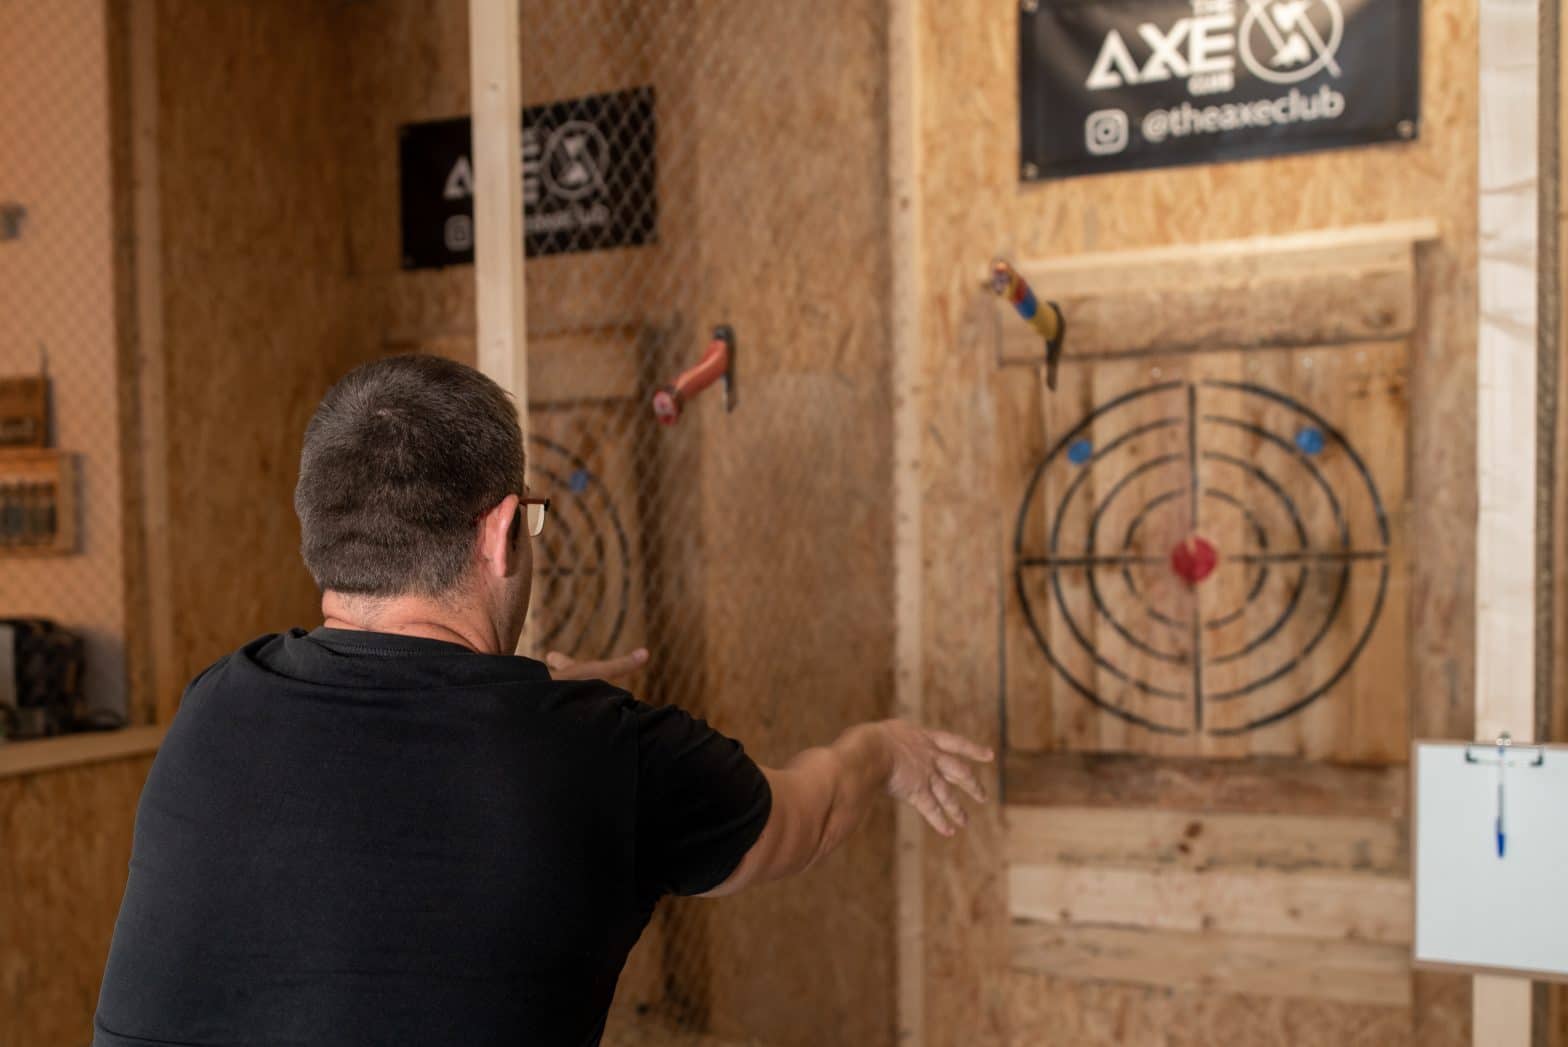 axe throwing  Club in Barcelona - The Axe Club